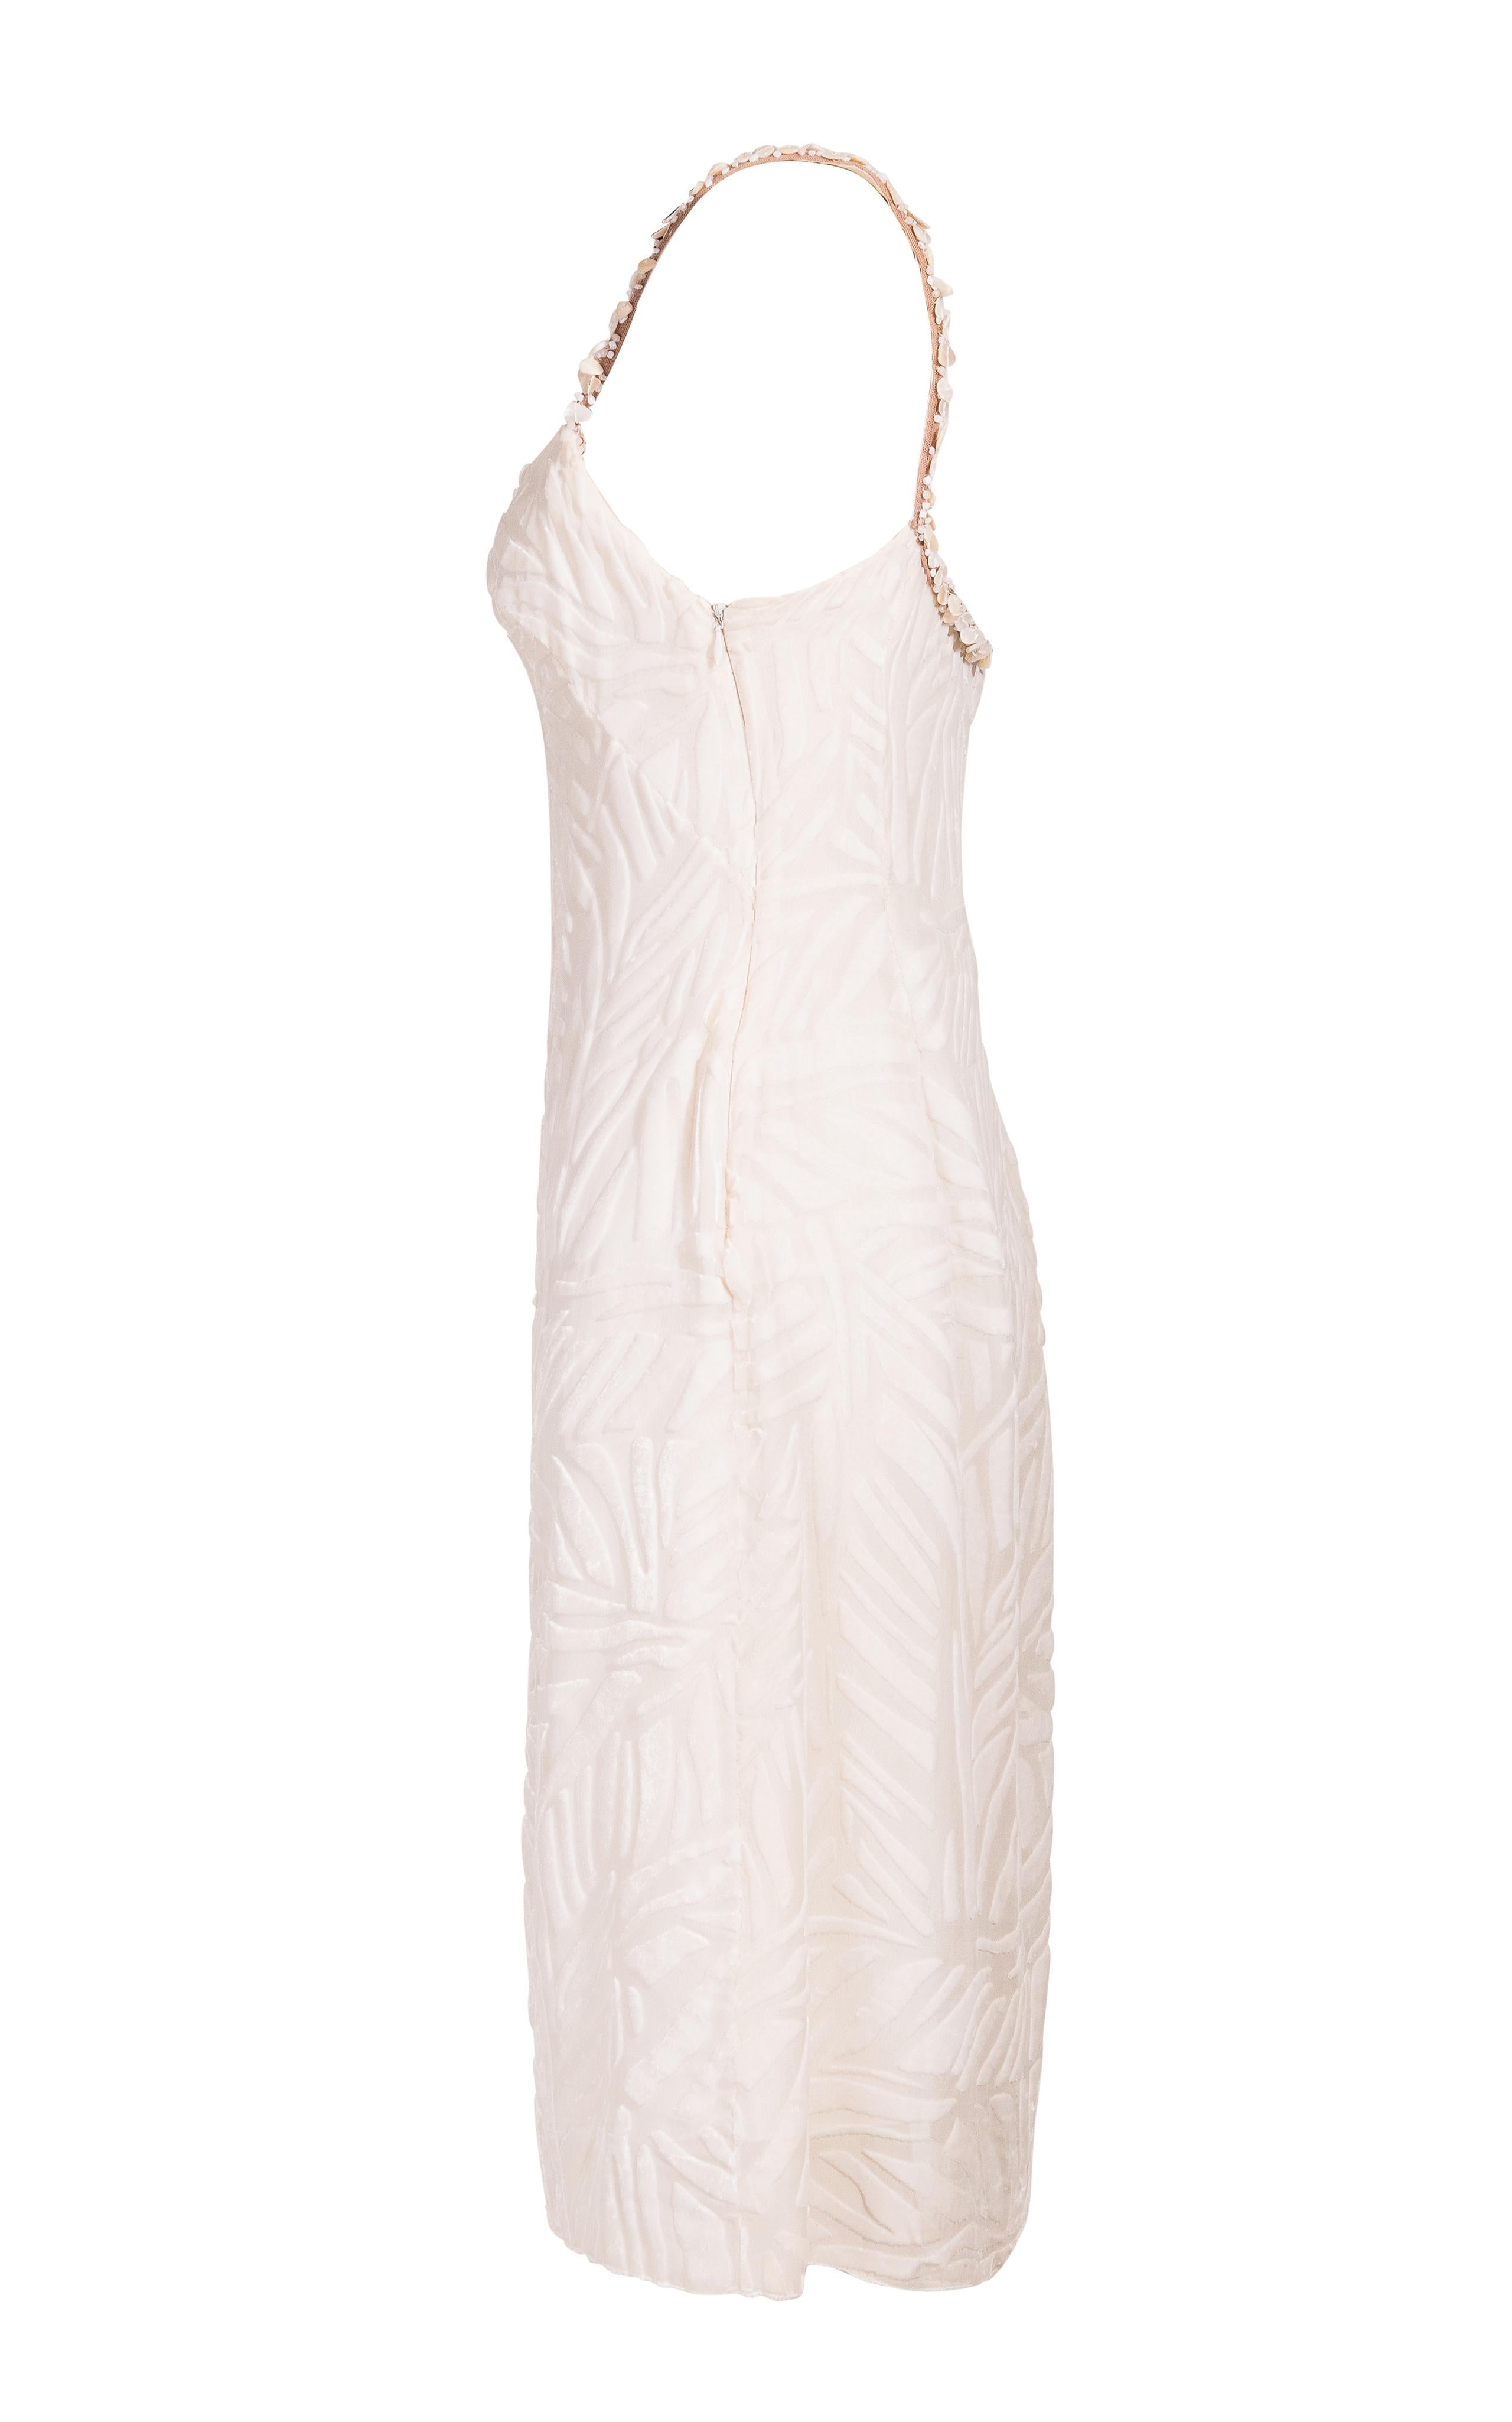 versace white mini dress